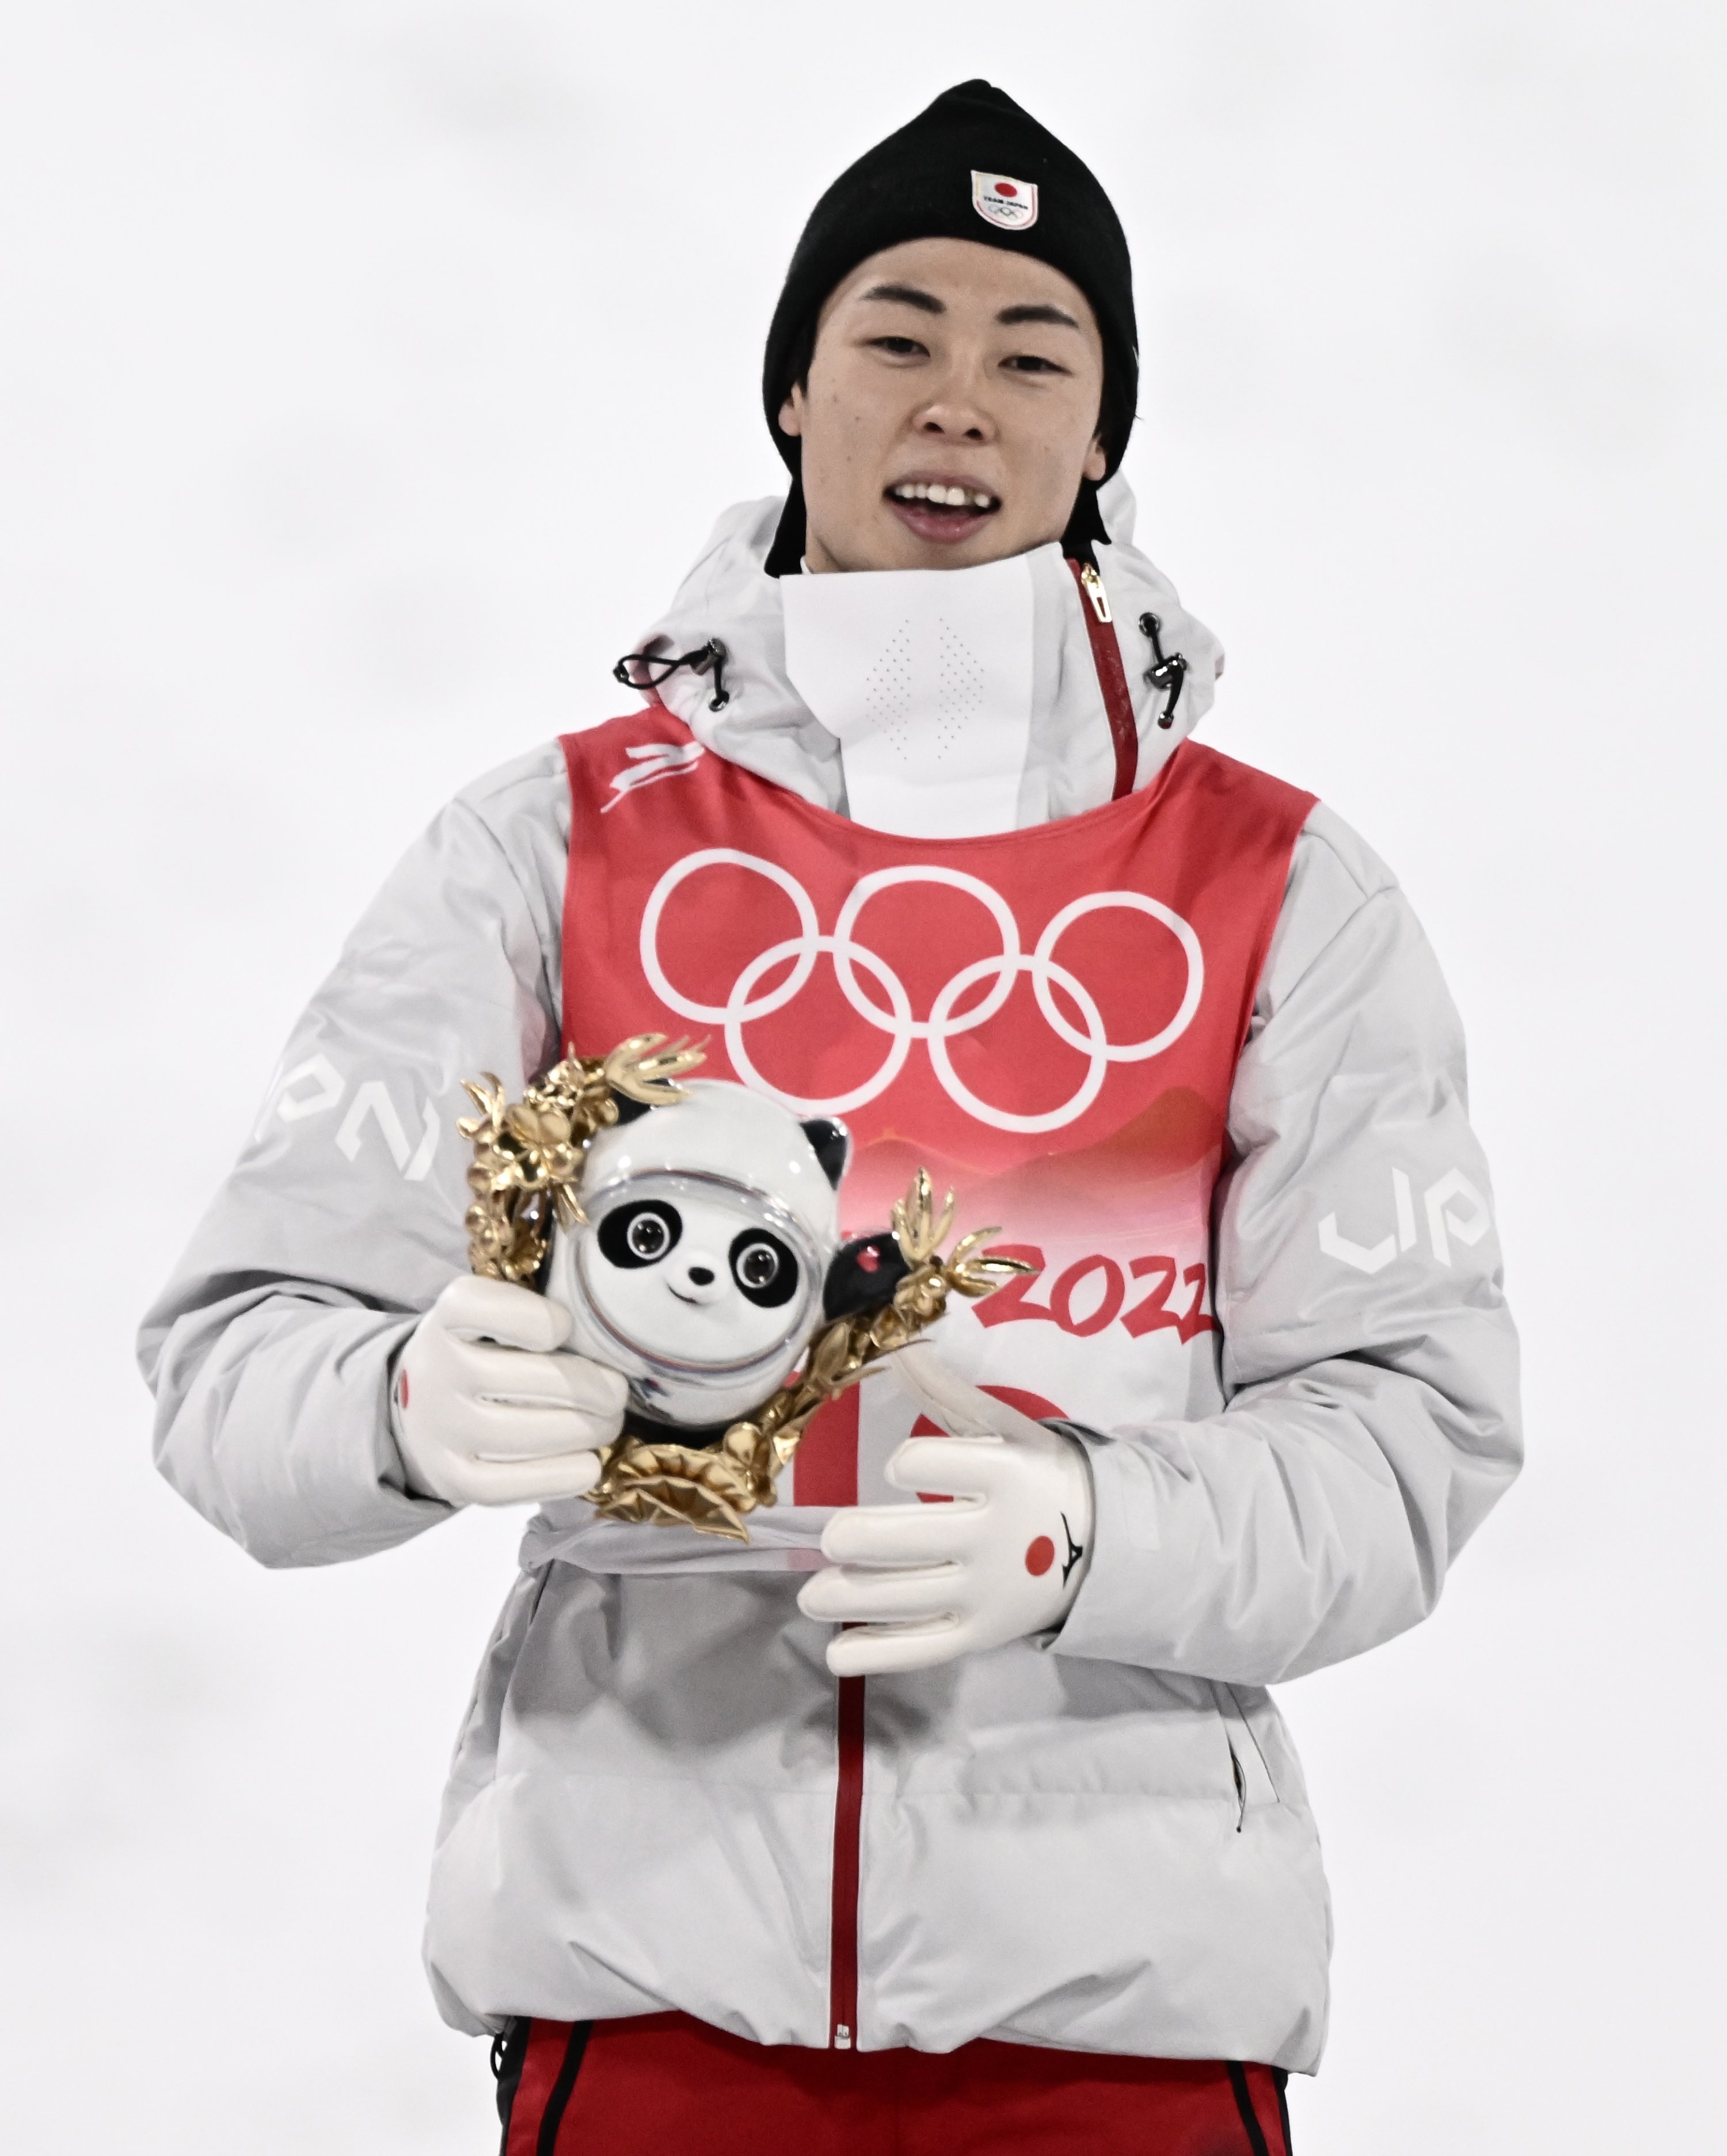 Japan's Ryoyu Kobayashi celebrates winning the Beijing 2022 Olympic Games Men's Ski Jumping Normal Hill final, Zhangjiakou, China, Feb. 6, 2022. (EPA Photo)